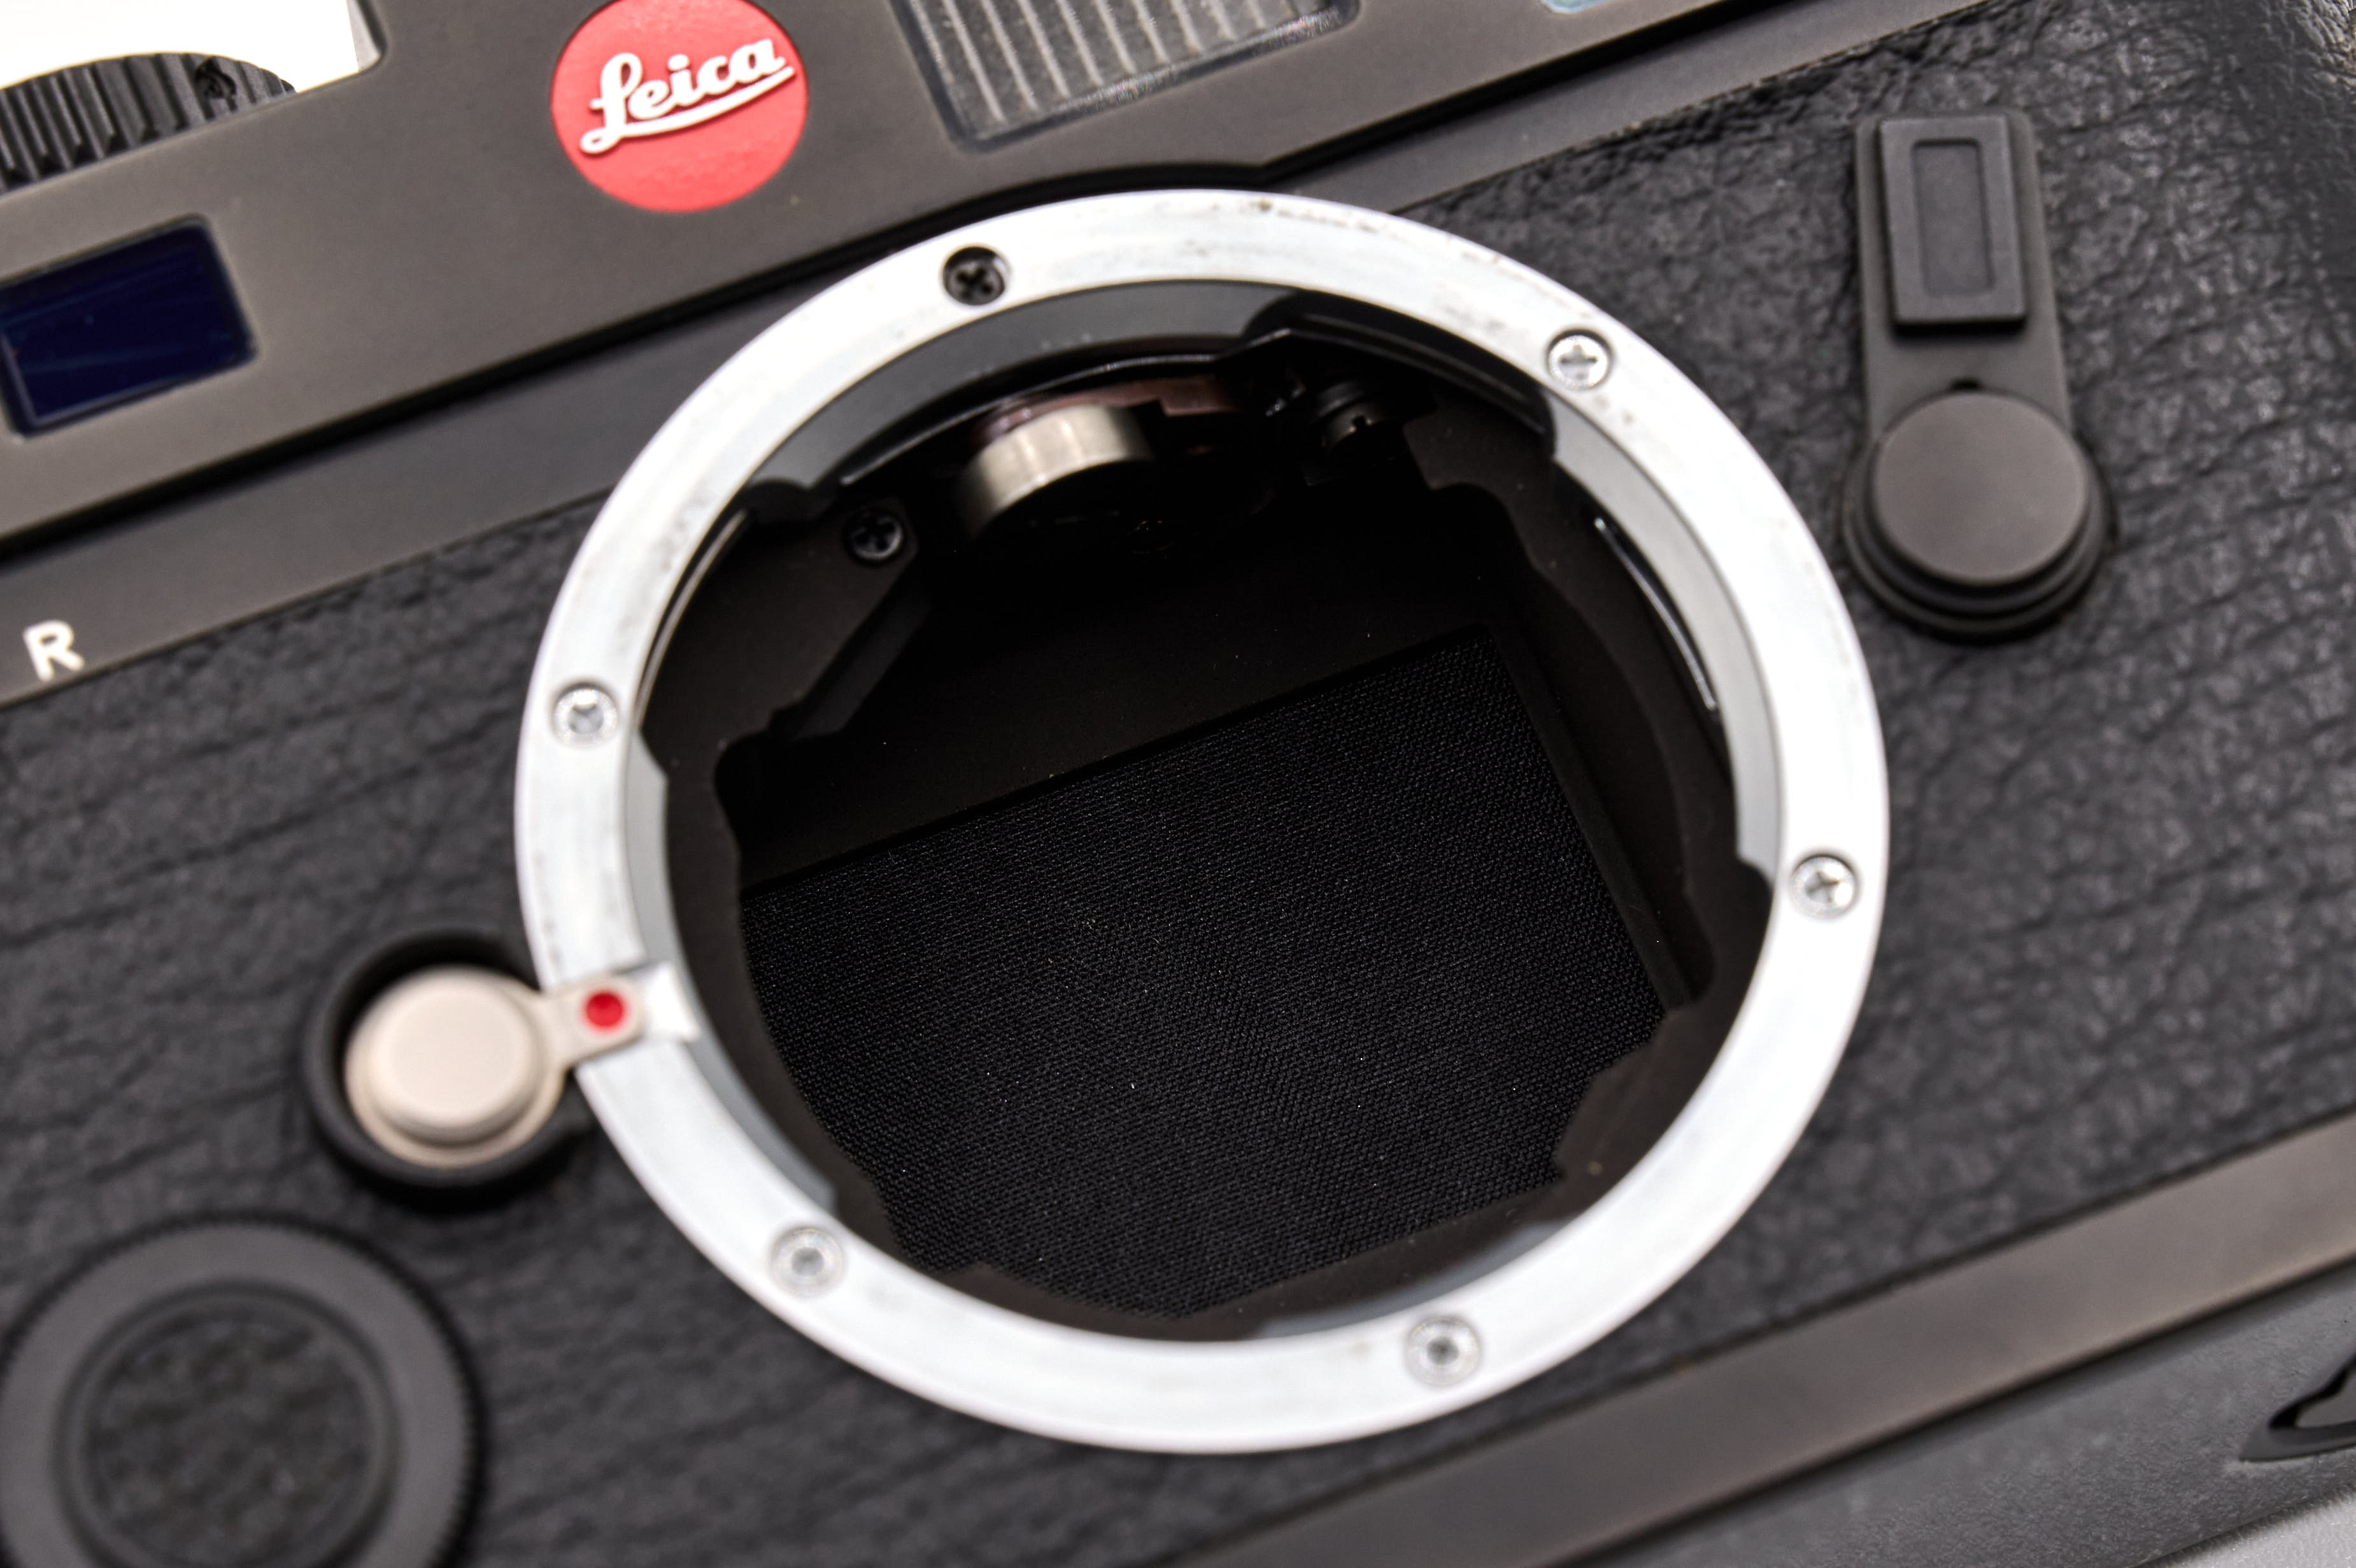 Leica M7 Black 10503